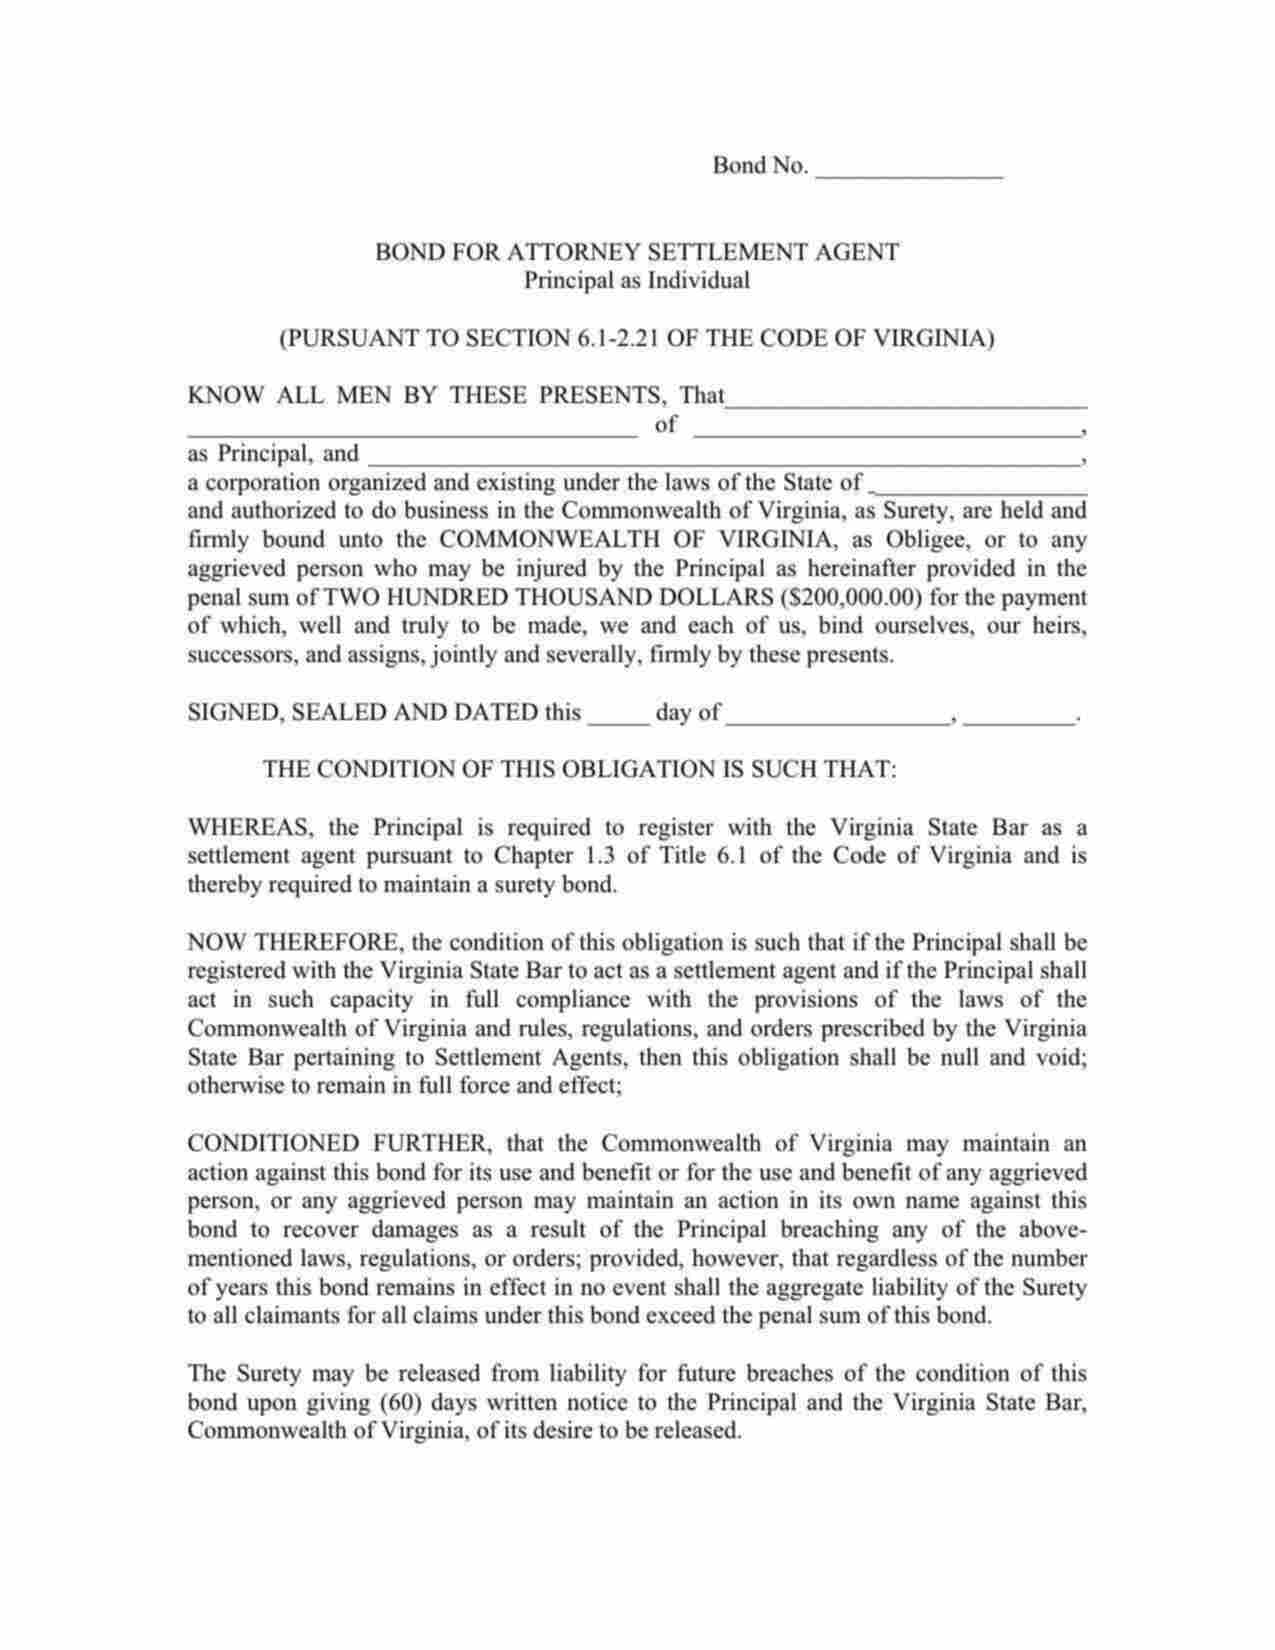 Virginia Attorney Settlement Agent - Individual Bond Form